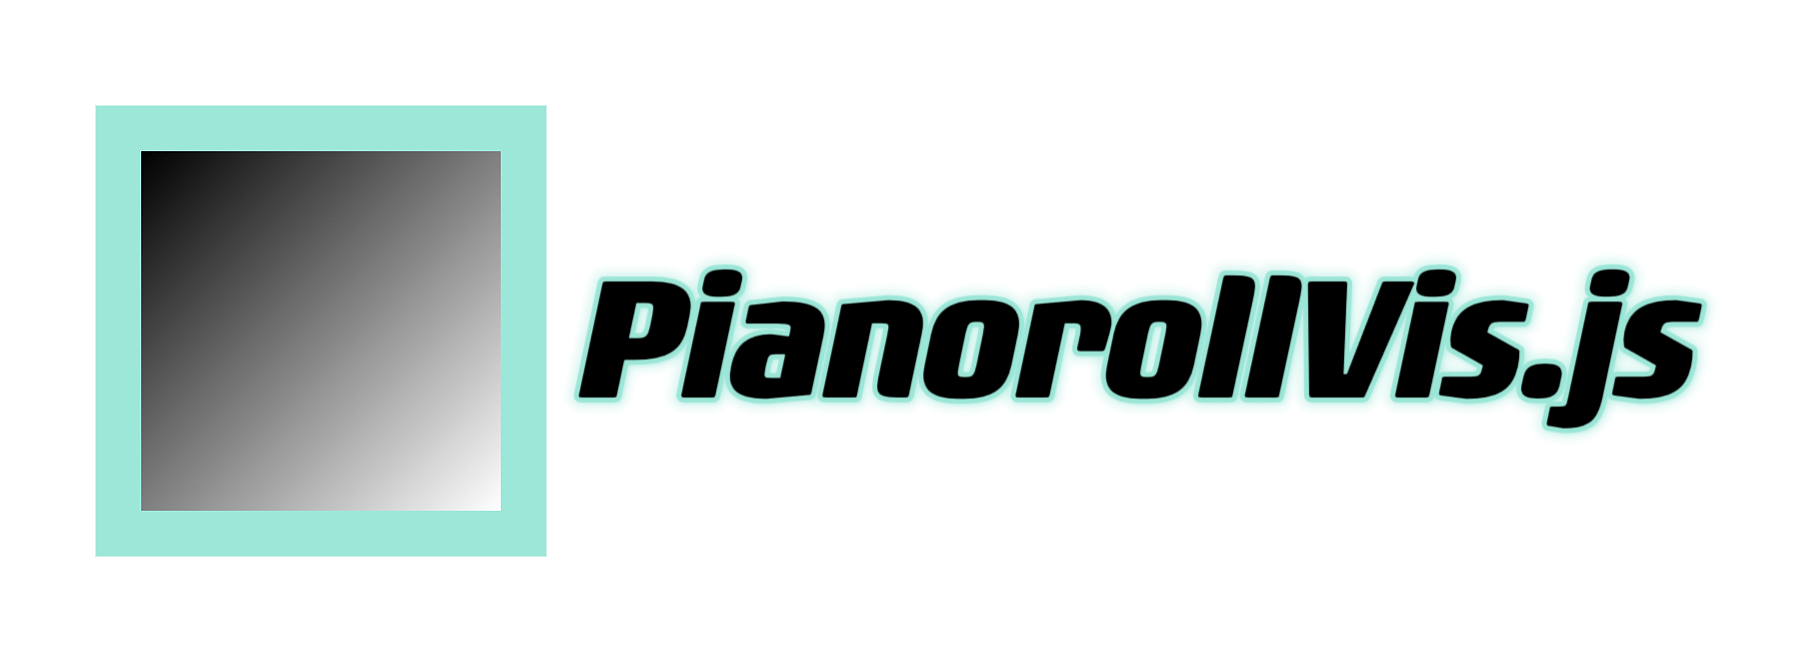 PianorollVis.js logo